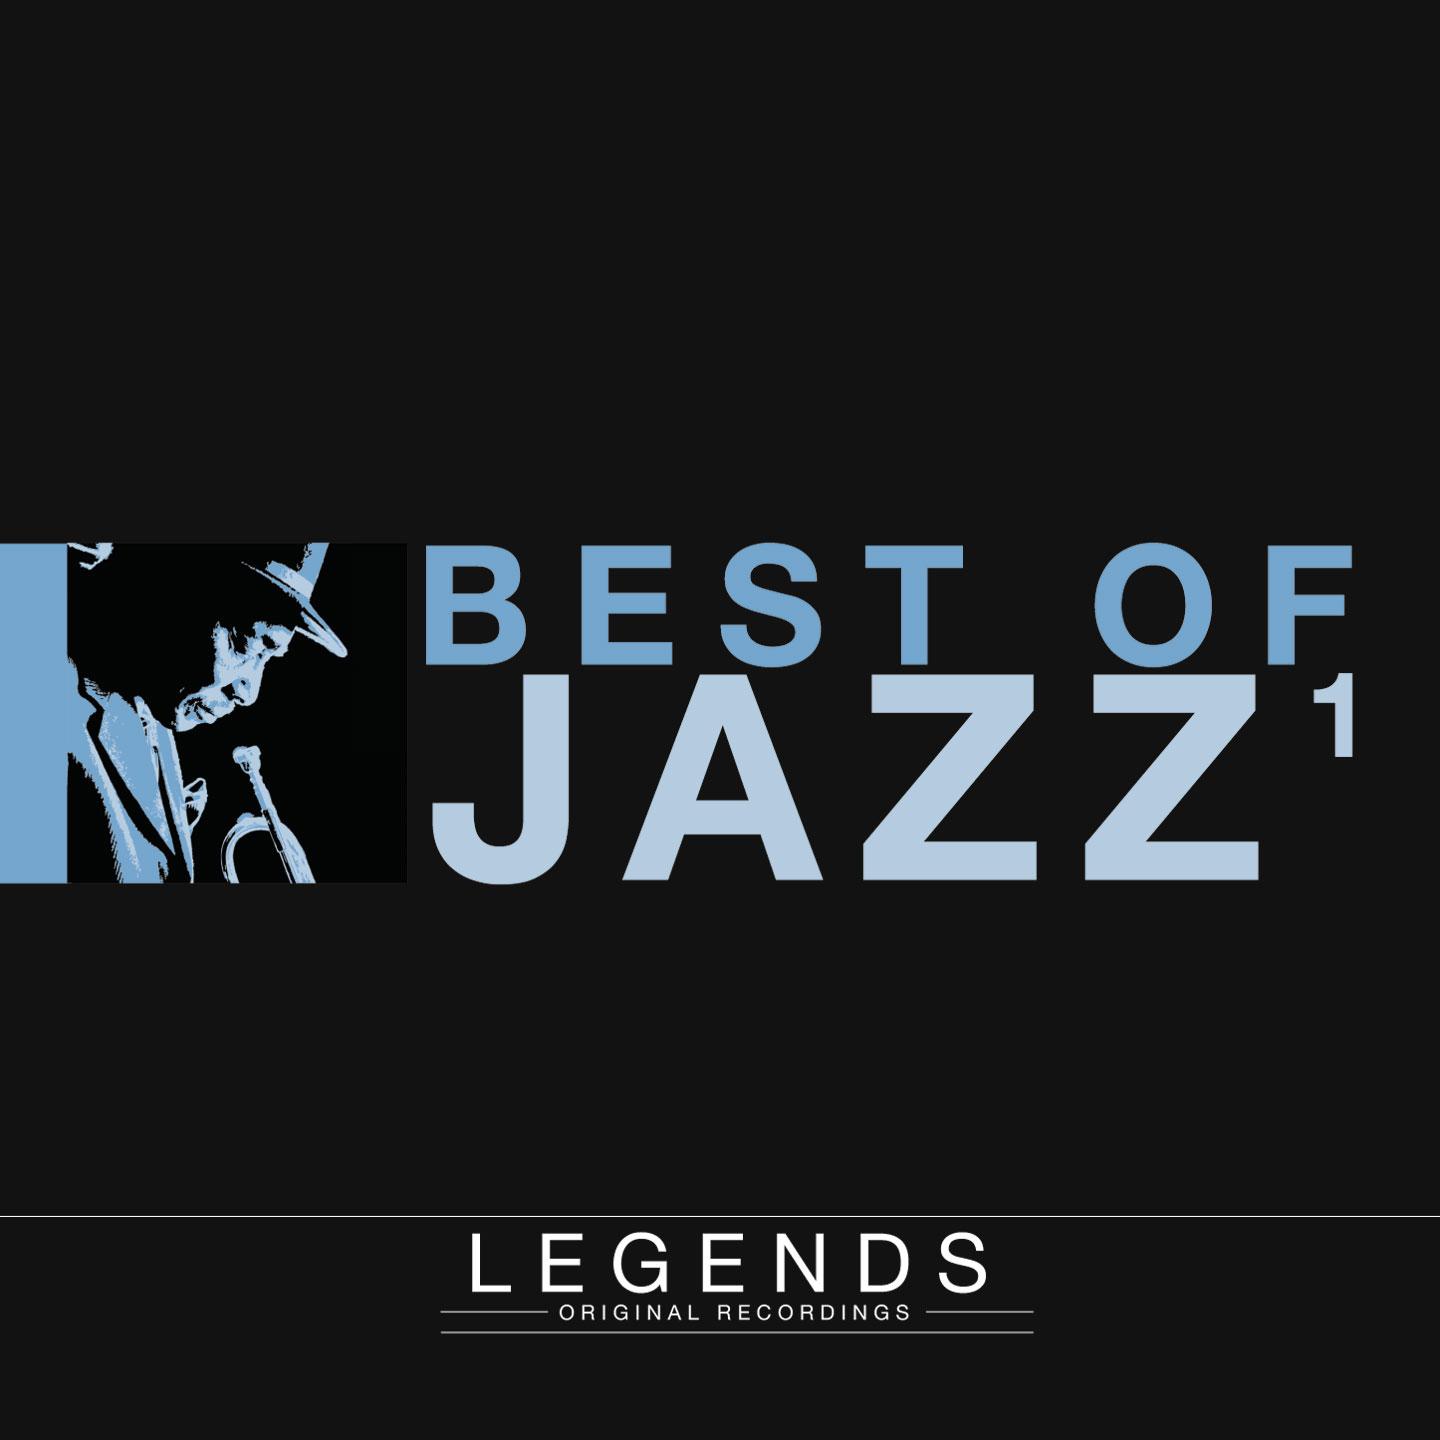 Legends - The Best of Jazz, Vol. 1 (Deluxe Edition)